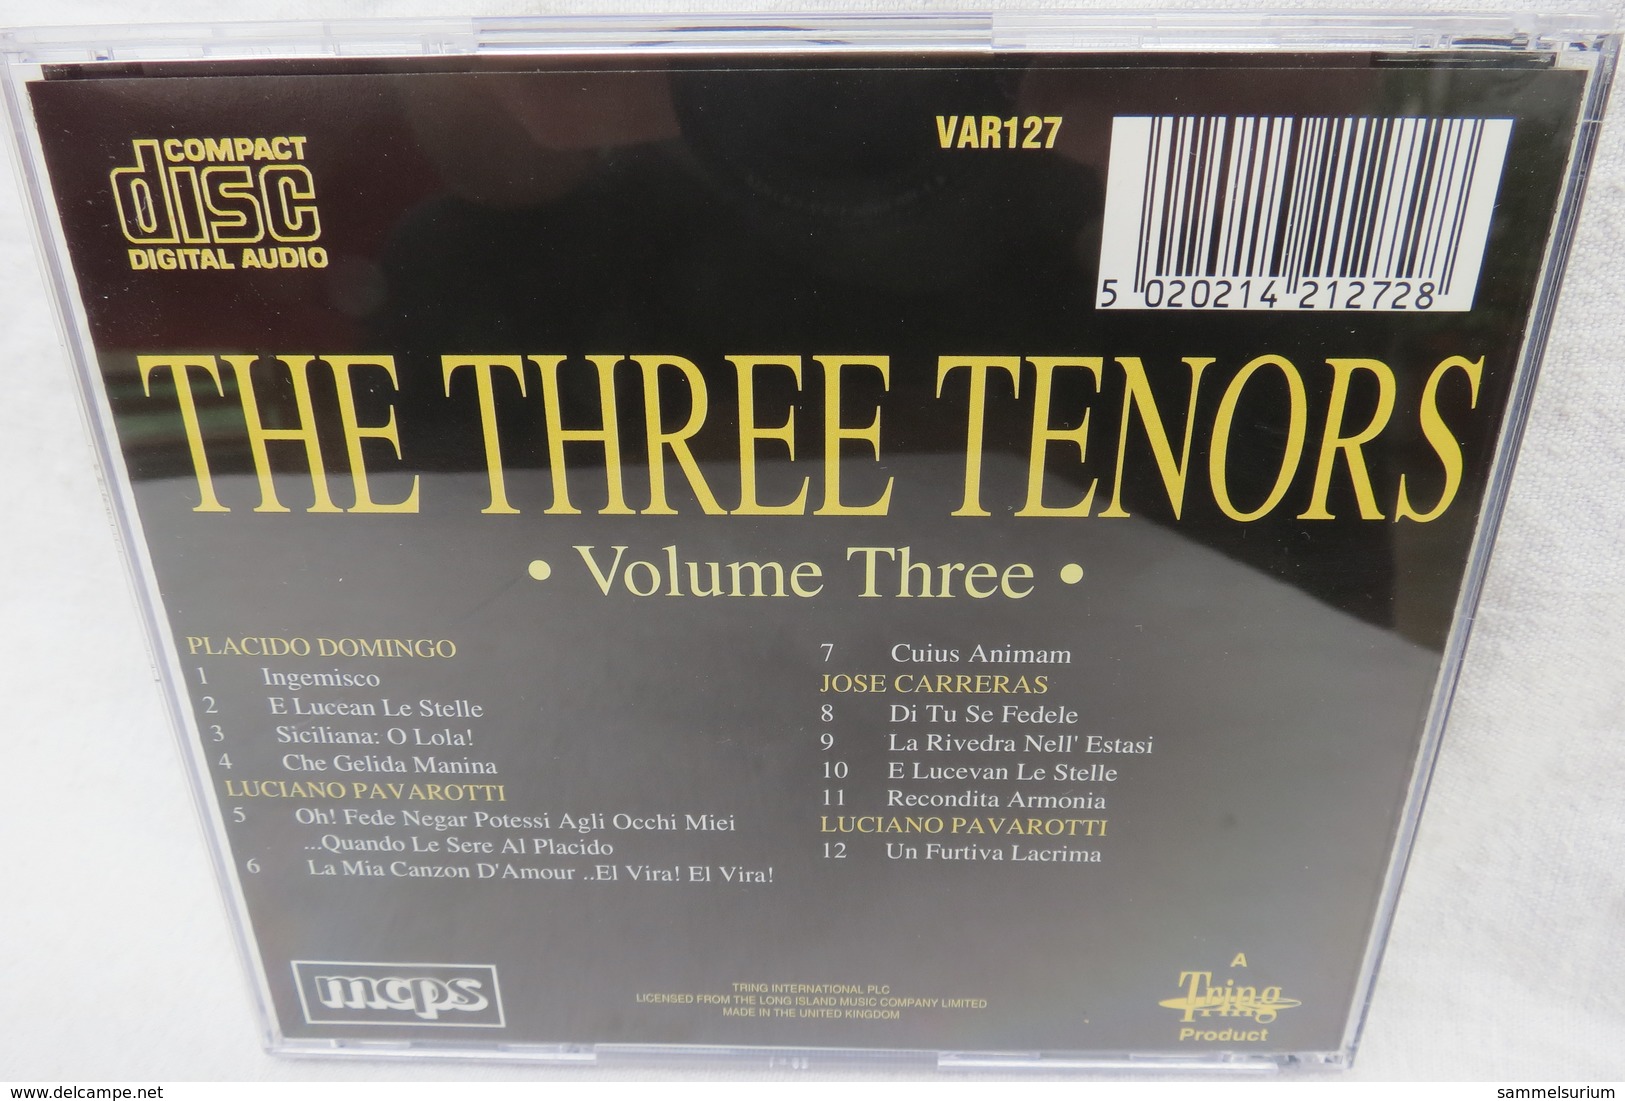 4 CDs "The Three Tenors" Jose Carreras, Luciano Pavarotti, Placido Domingo